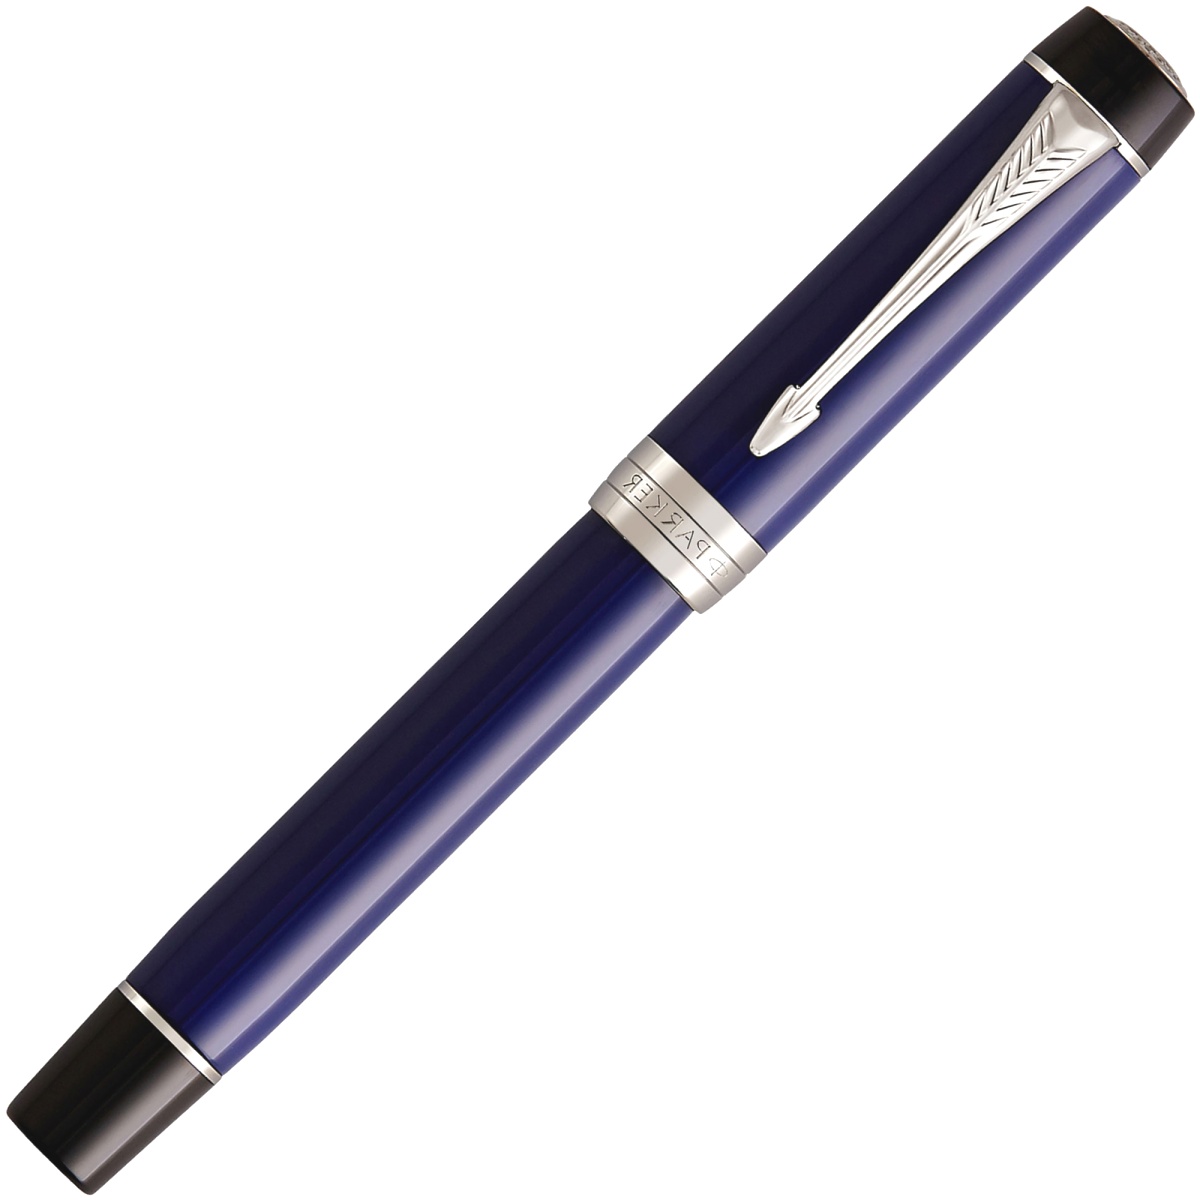  Перьевая ручка Parker Duofold Classic International F74, Blue and Black CT (Перо F), фото 2